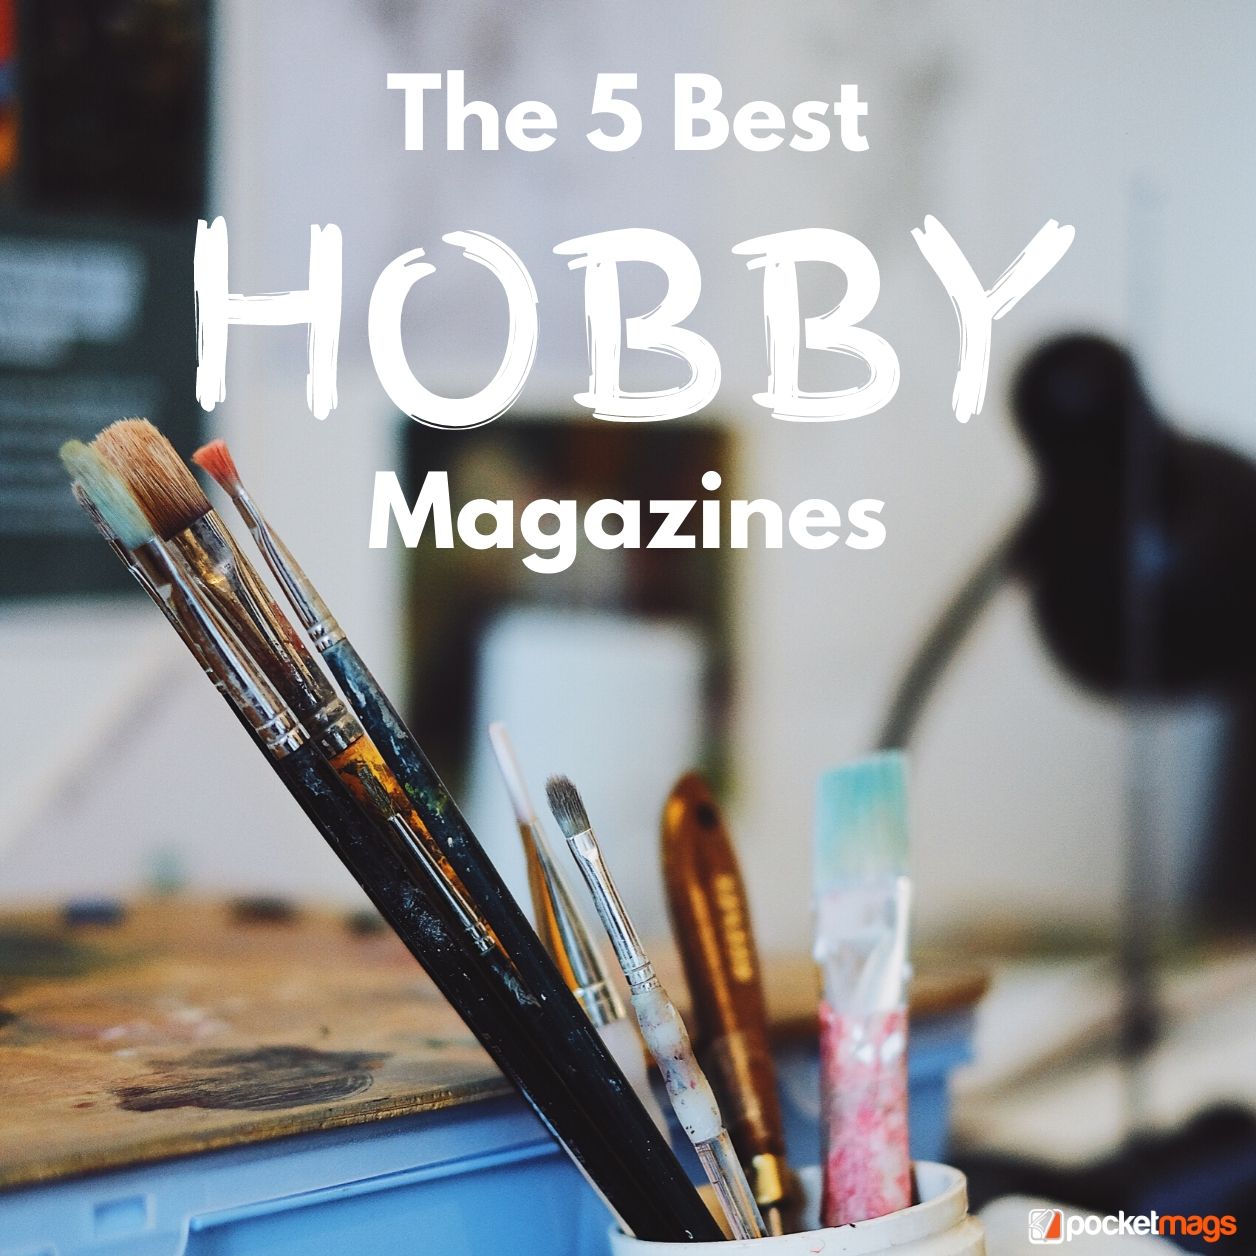 The 5 Best Hobby Magazines